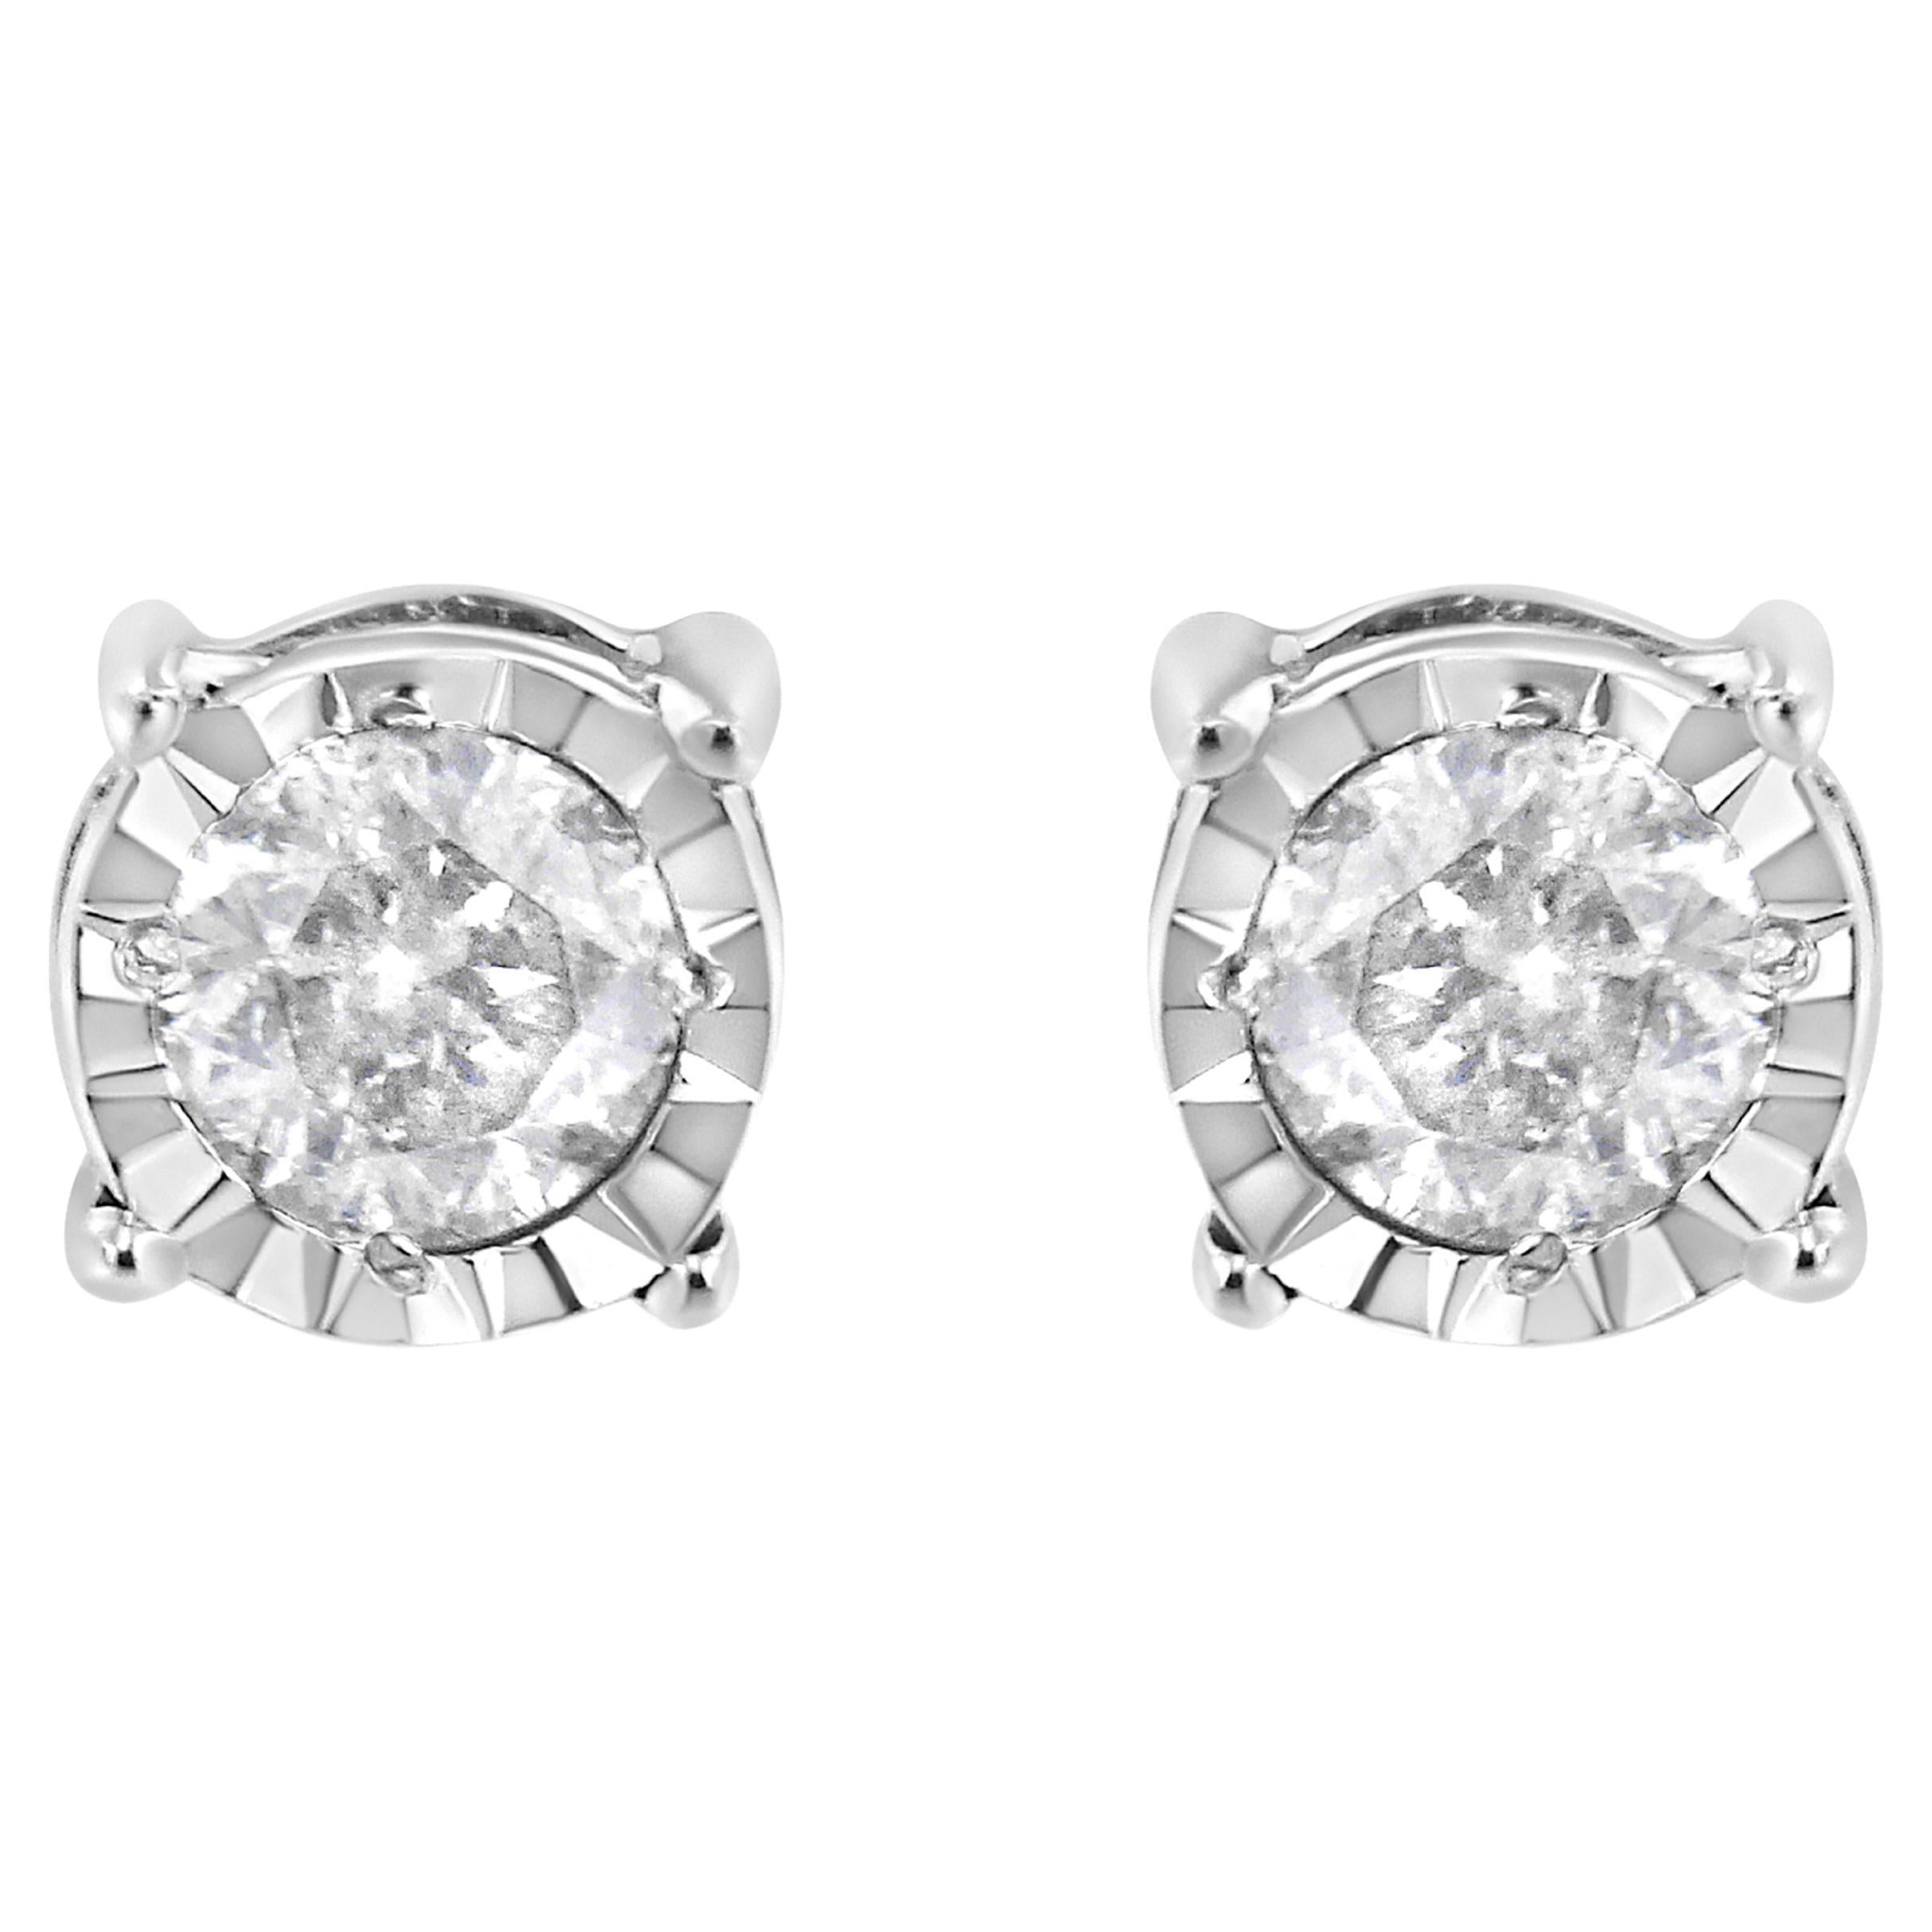 .925 Sterling Silver 3/8 Carat Brilliant Cut Diamond Solitaire Earrings